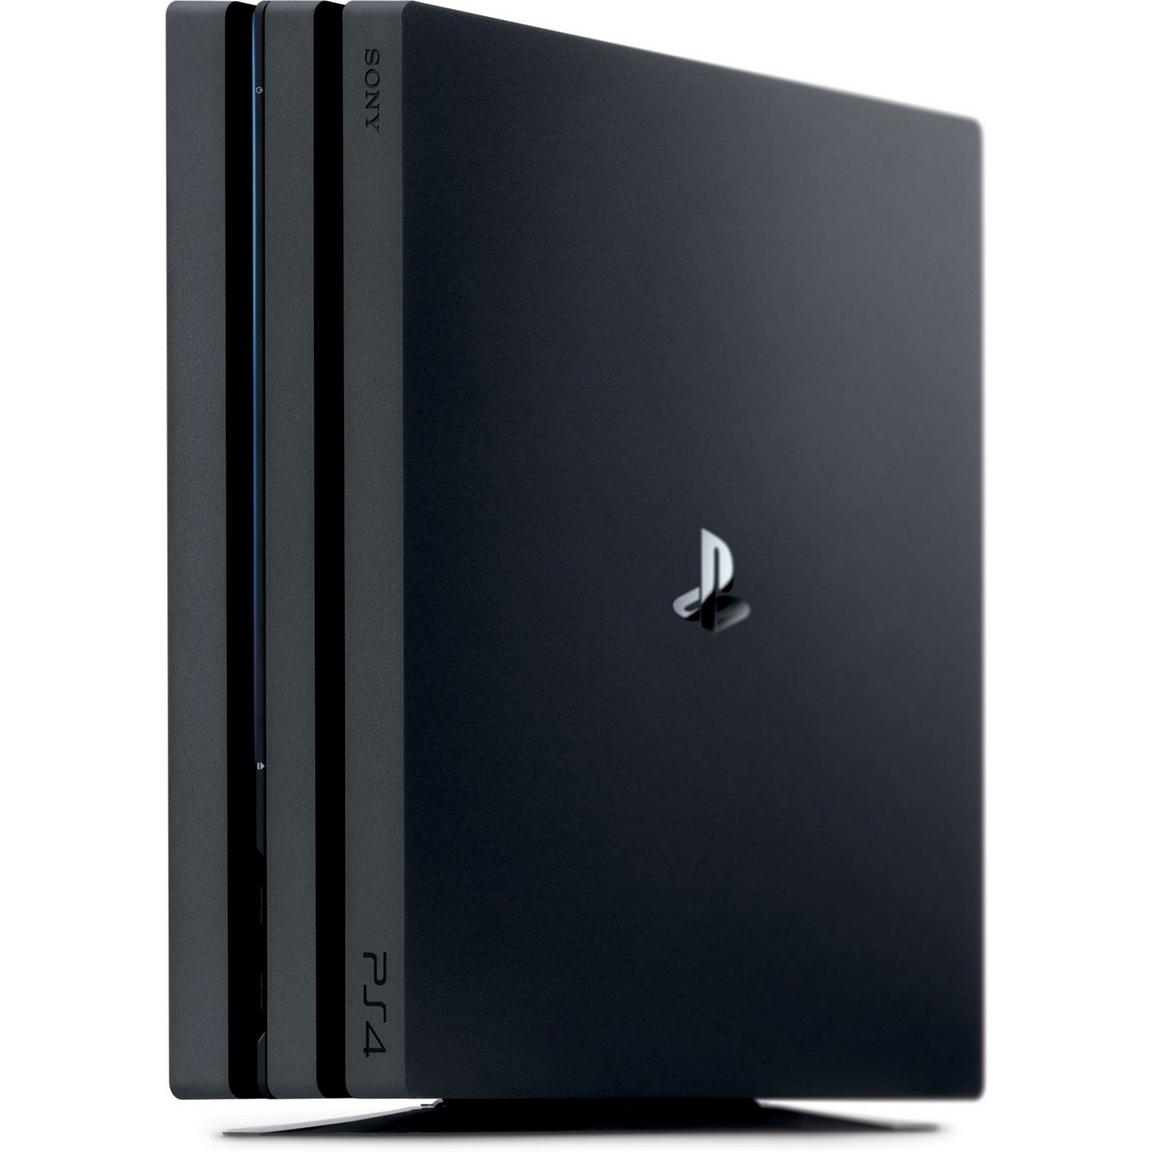 Playstation 4 Pro 1TB Console - (PRE) (Playstation 4)